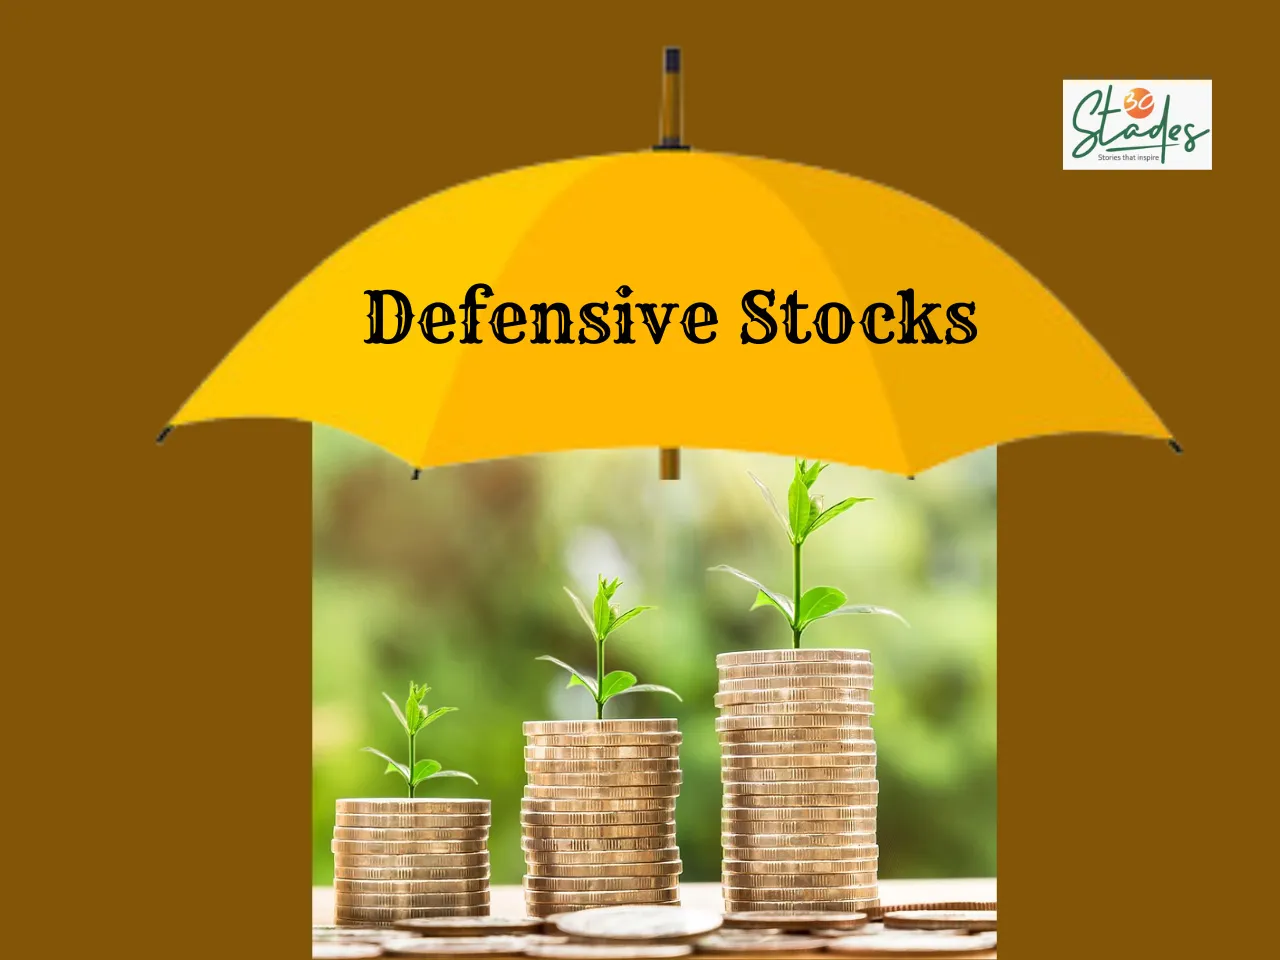 Five defensive stocks to protect your portfolio in current volatile market